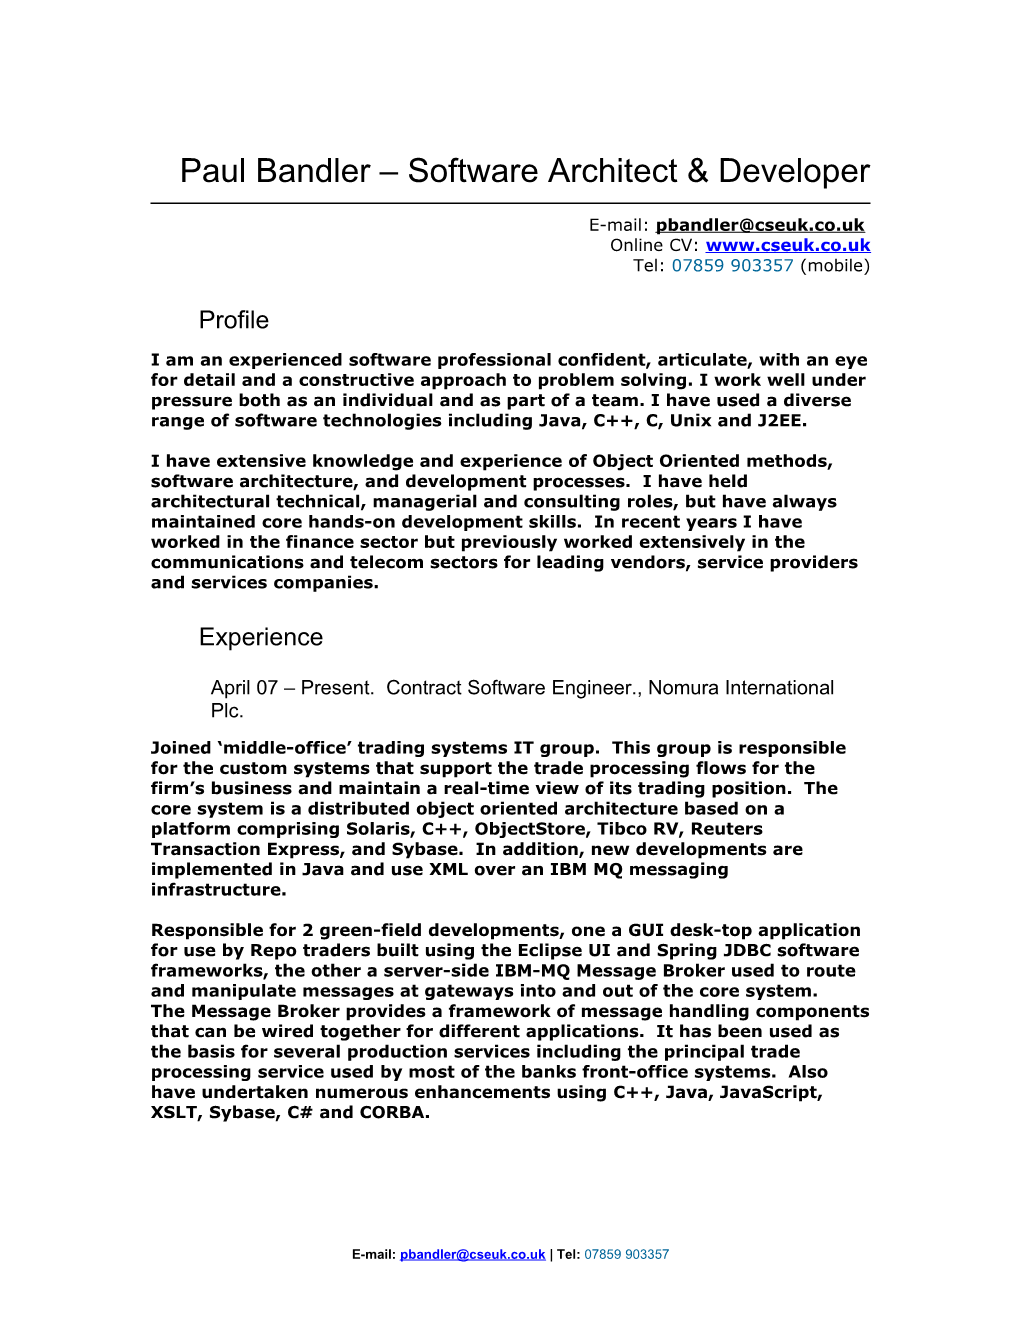 Paul Bandler Software Architect & Developer